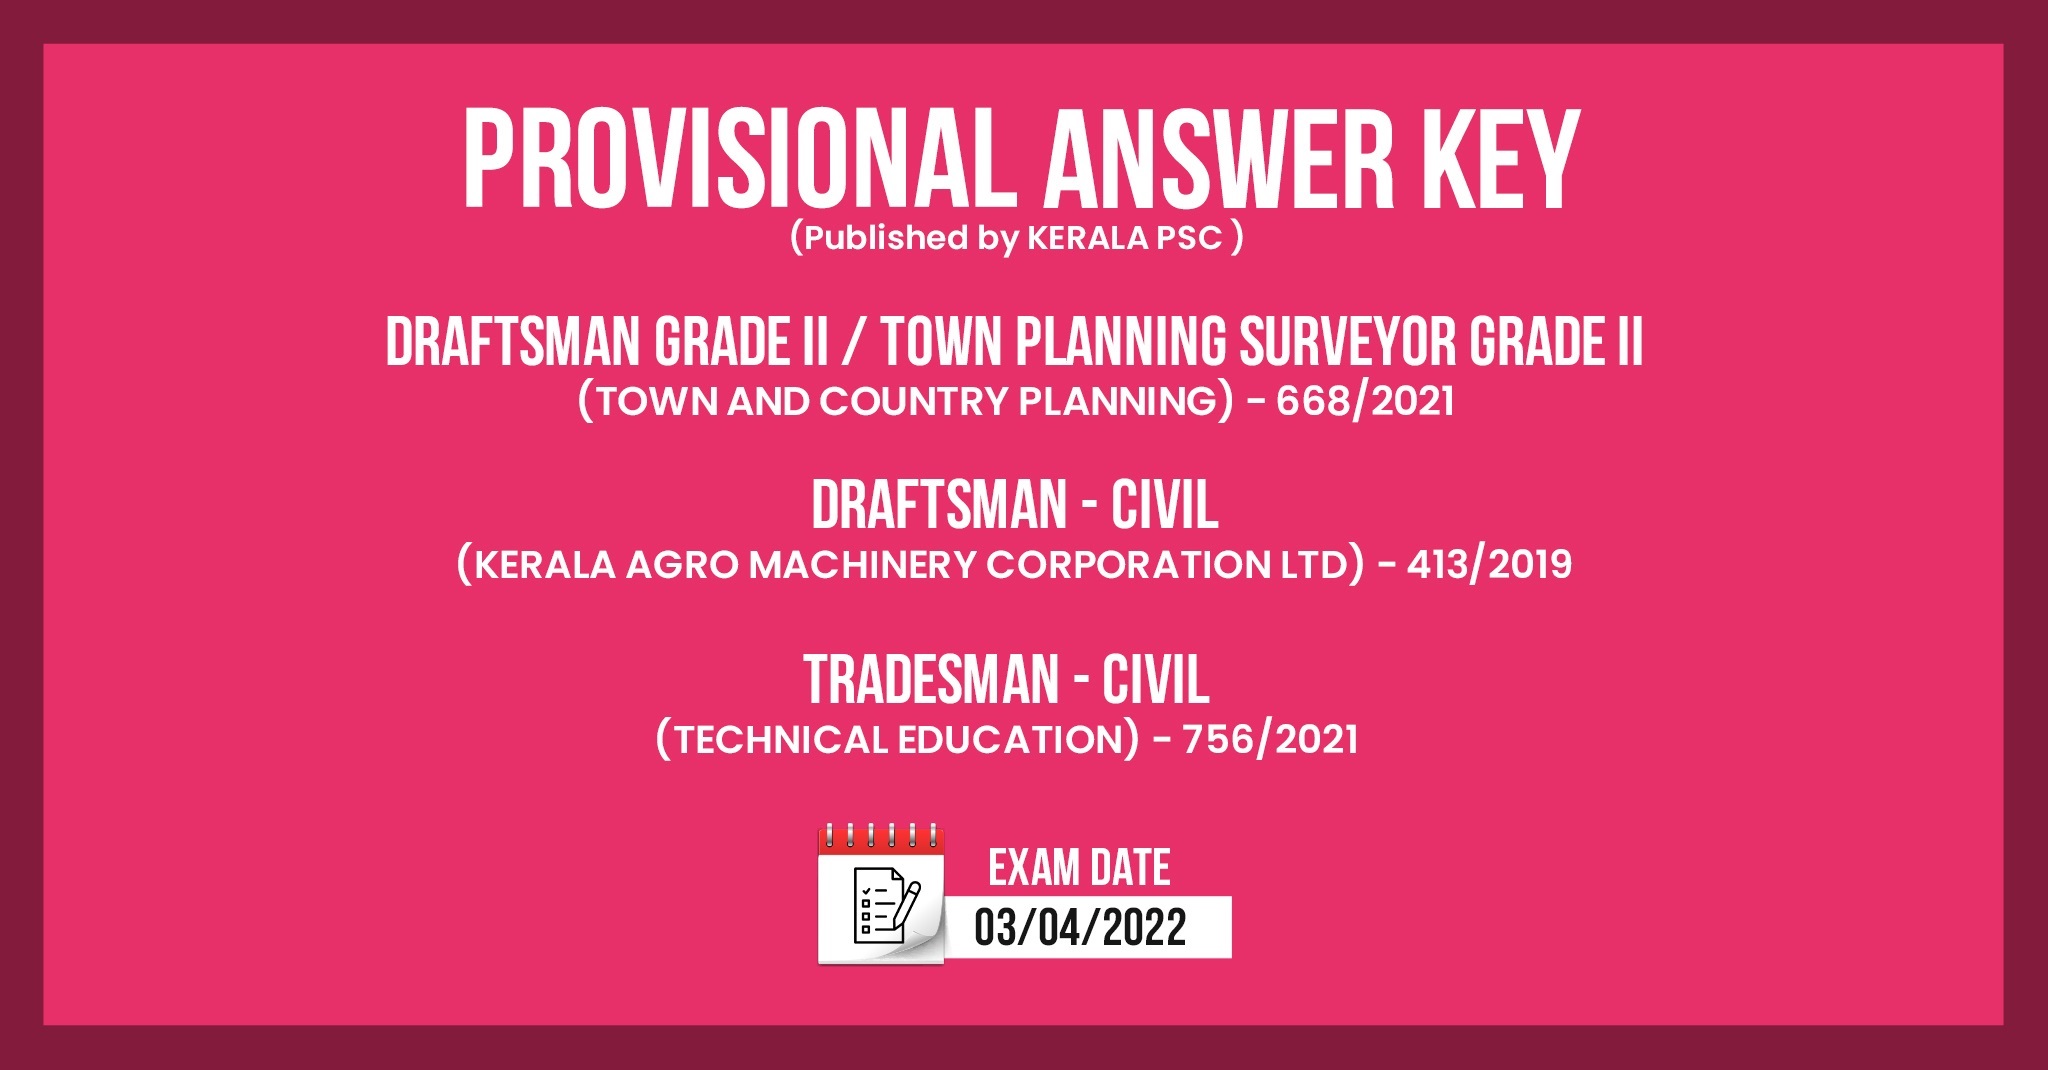 Draftsman Grade II / Draftsman Civil/ Tradesman Civil Provisional Answer key